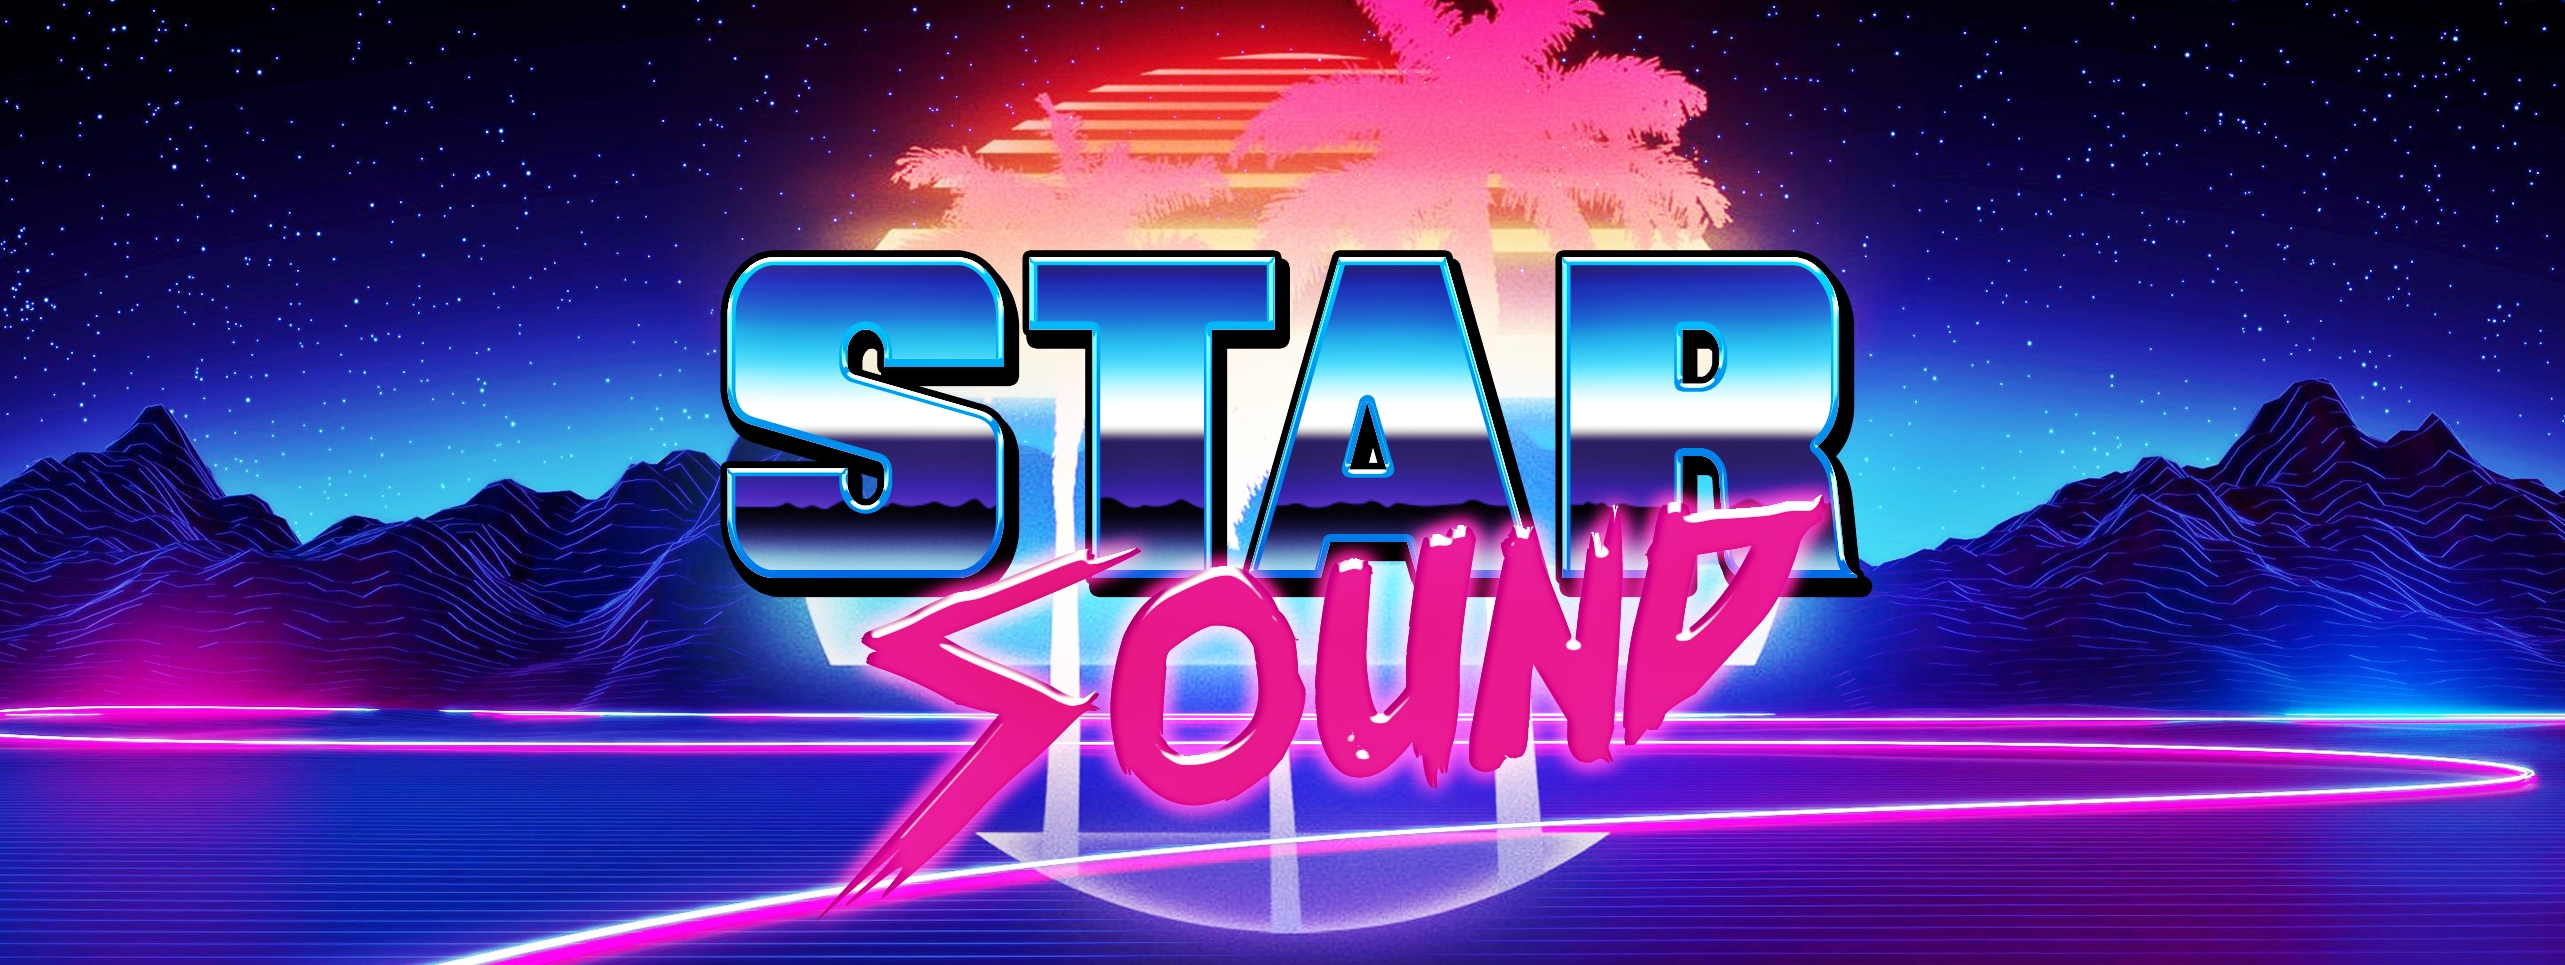 Sound Digital Art Retrowave Stars 2565x965